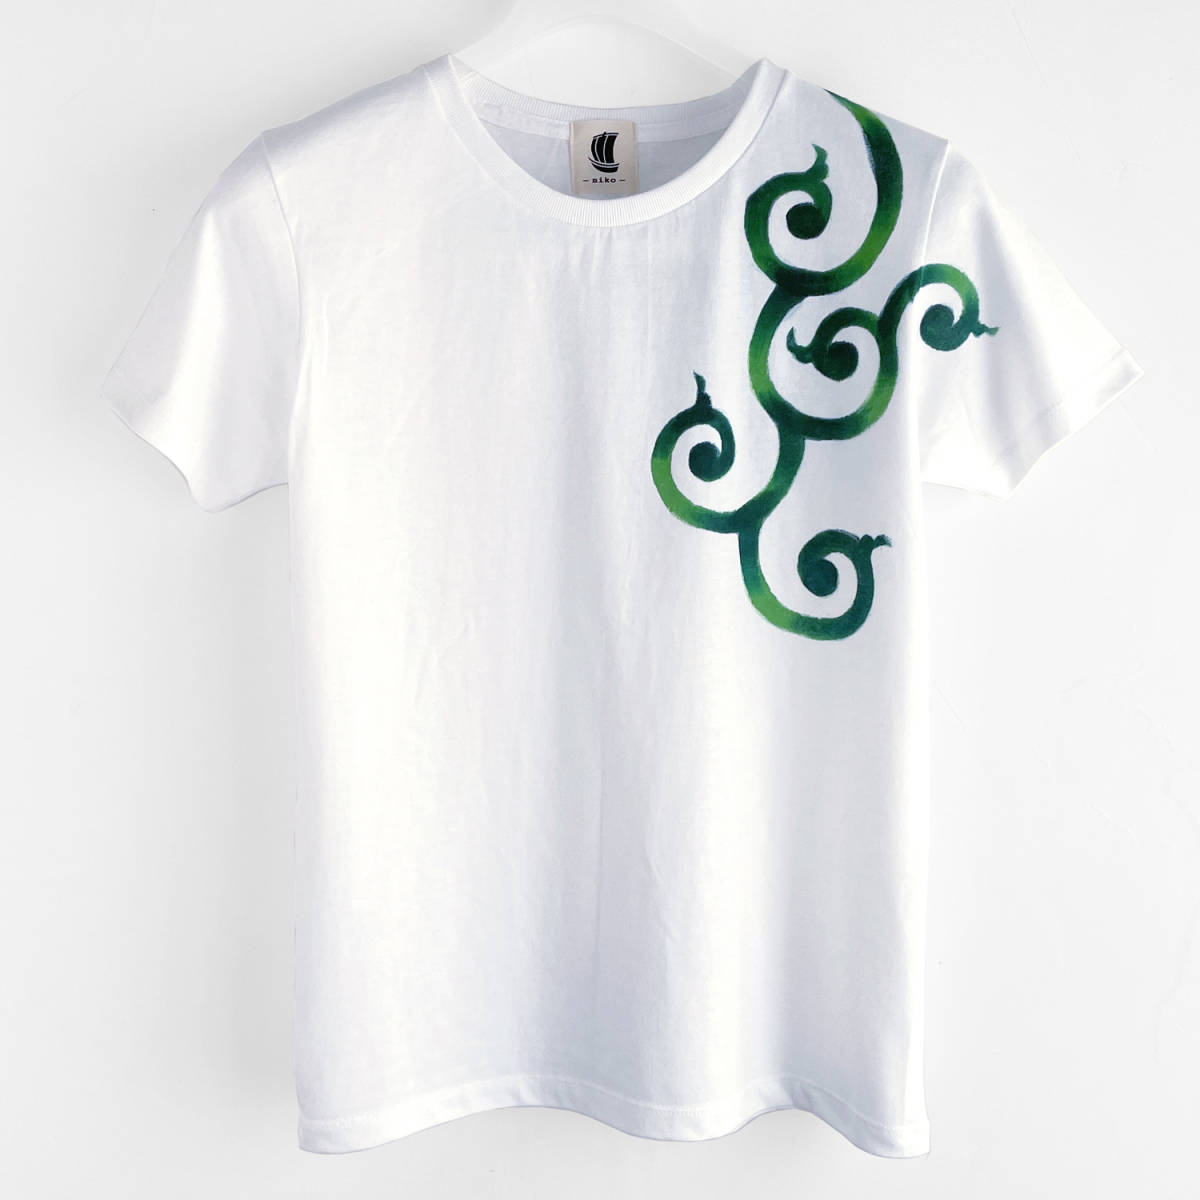 Camiseta de mujer talla M Camiseta verde con estampado arabesco Camiseta blanca hecha a mano pintada a mano, talla m, cuello redondo, estampado